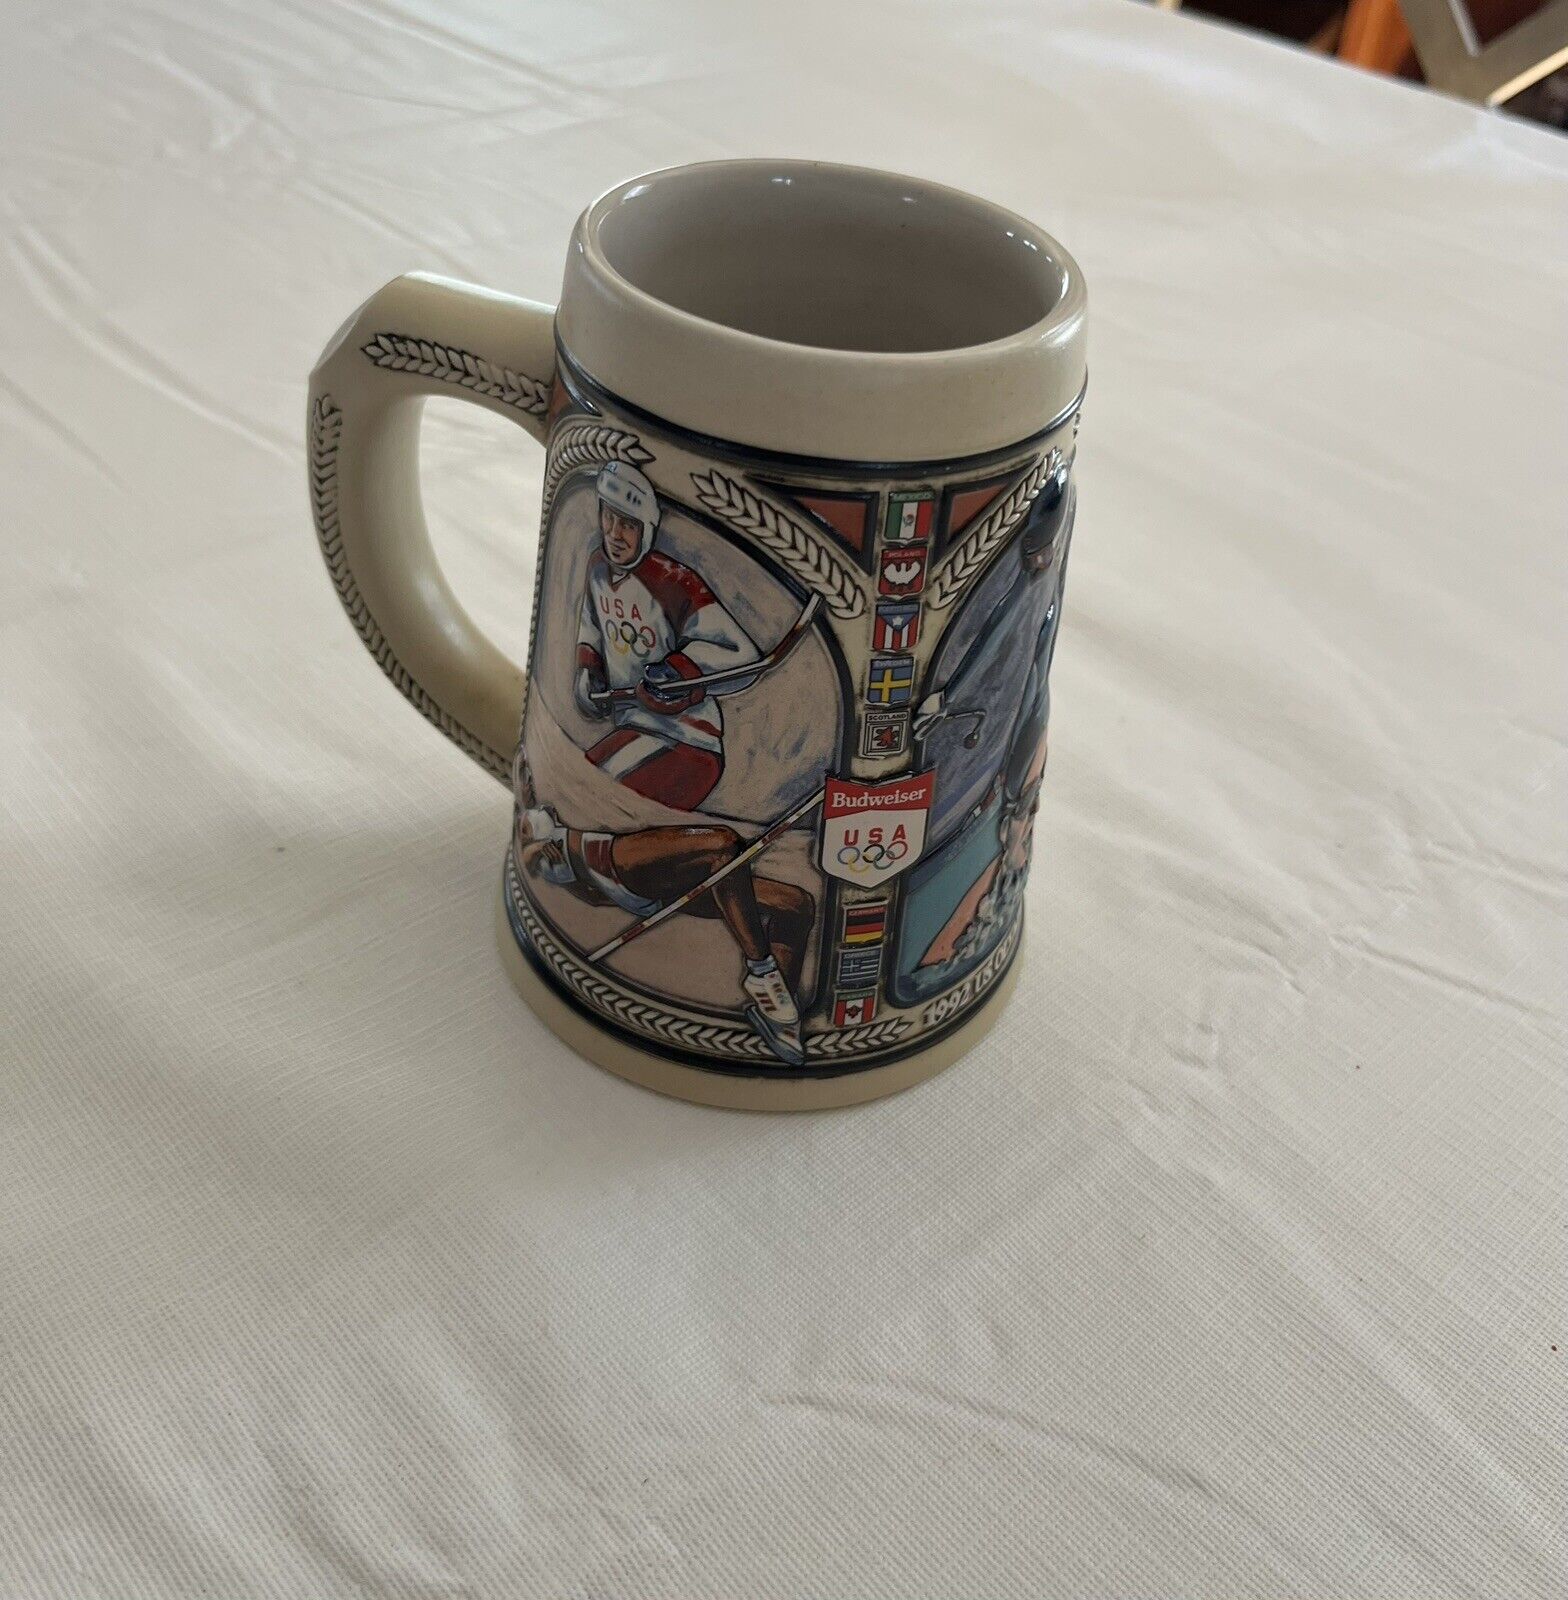 Anheuser Busch Beer Stein Mug 1992 US Olympic Team Cup by Ceramarte